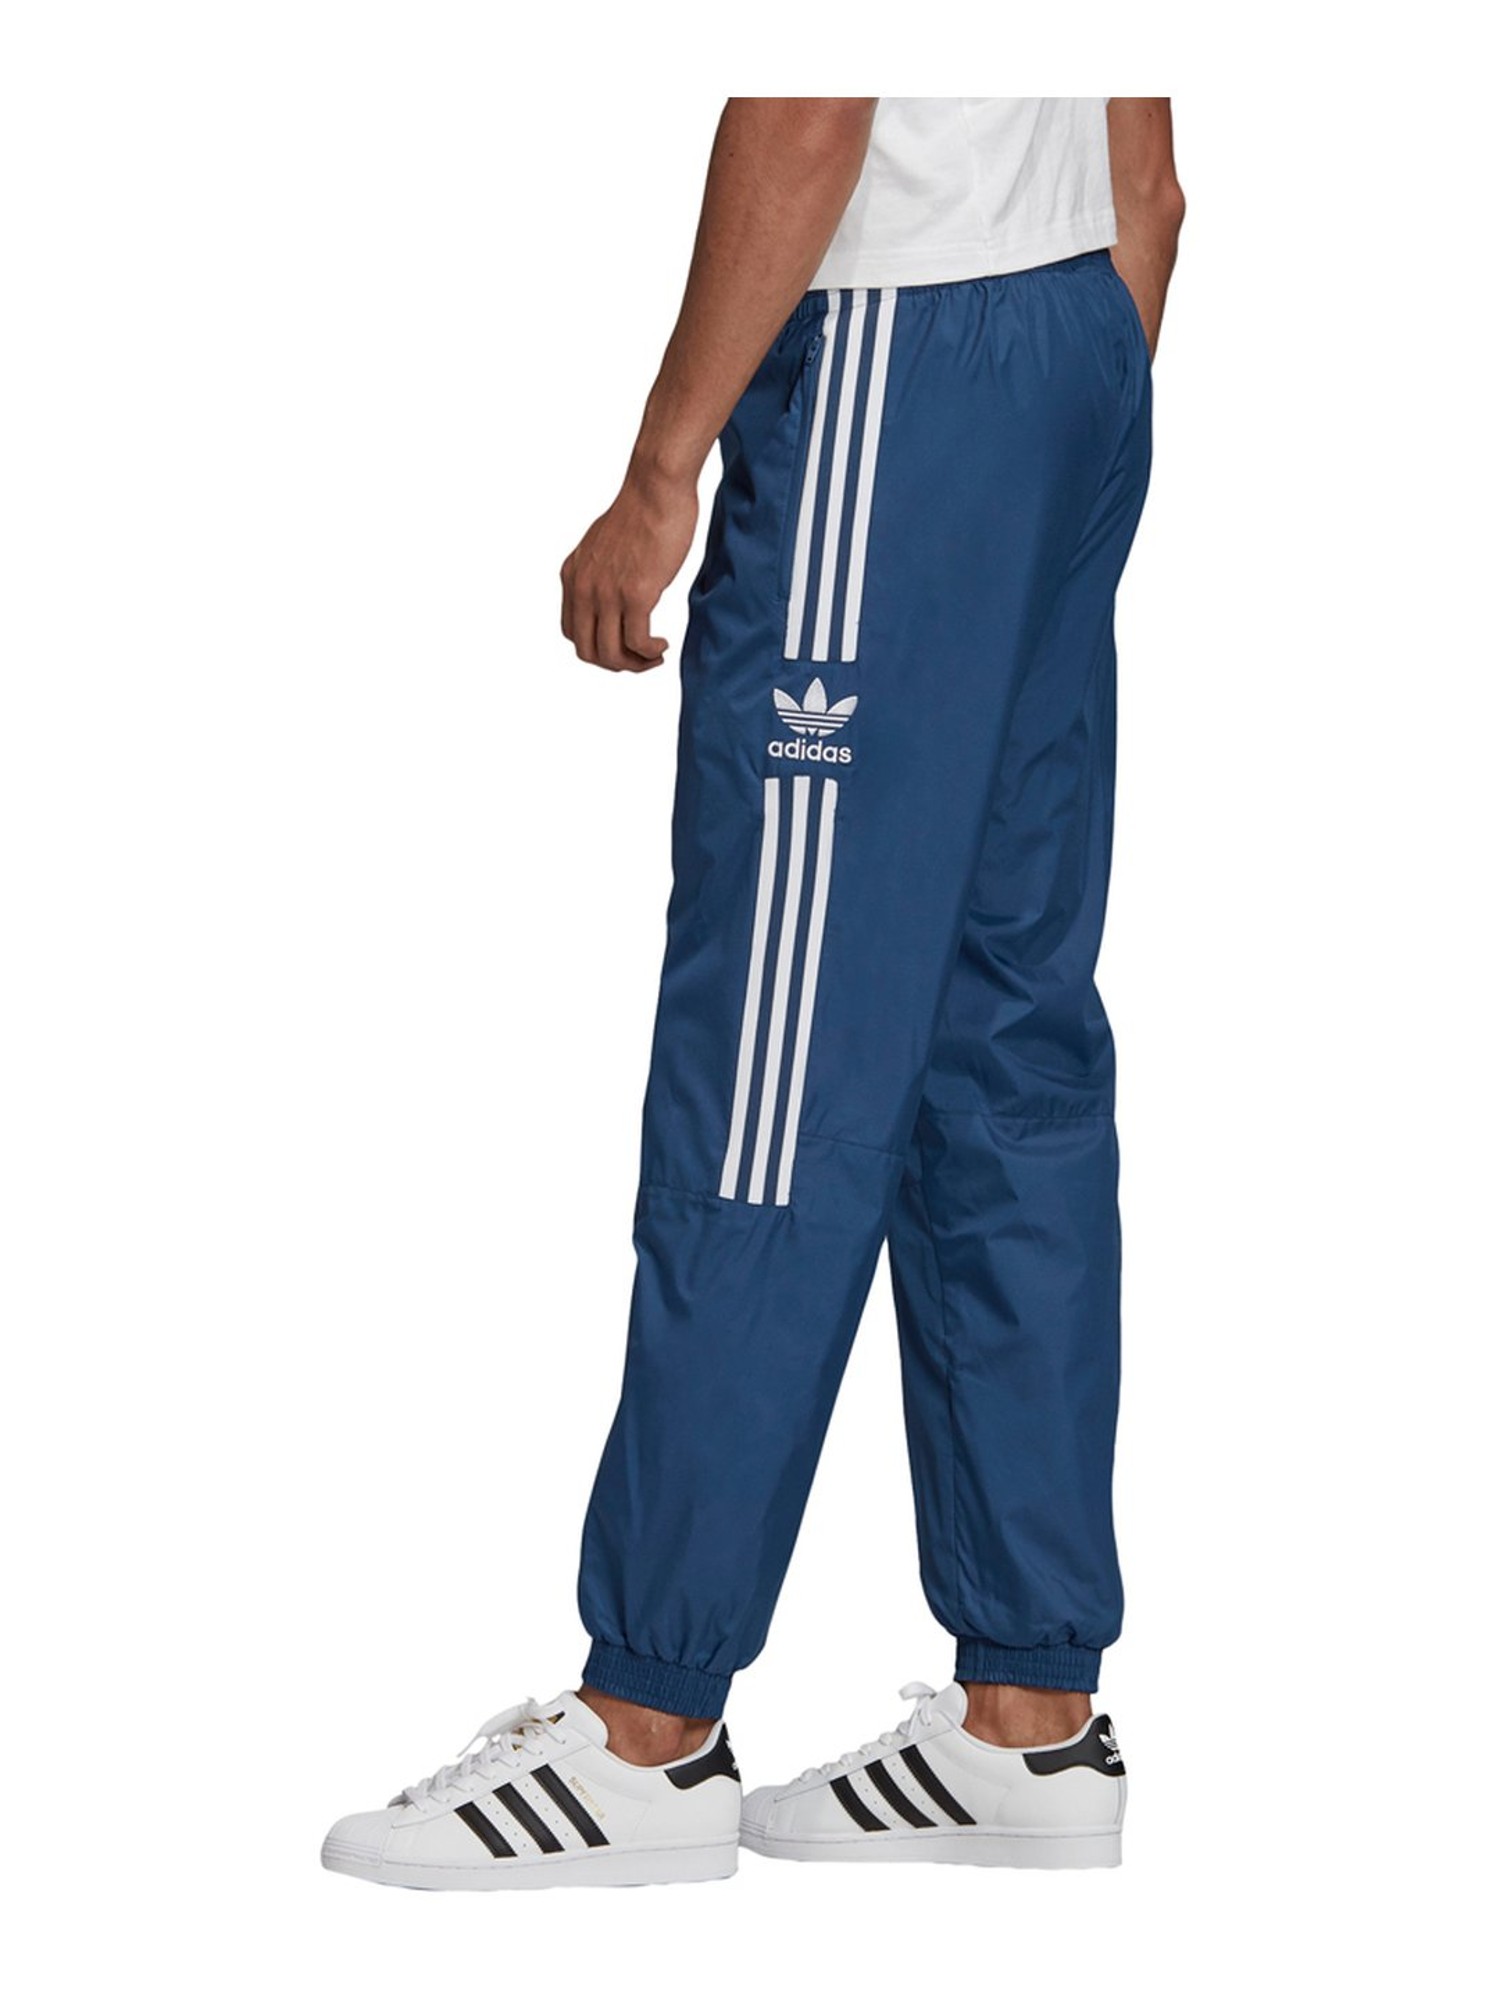 Adidas Mens Track Pants ED9296SBlackWhiteSmall  BlackWhite  S   Amazonin Clothing  Accessories